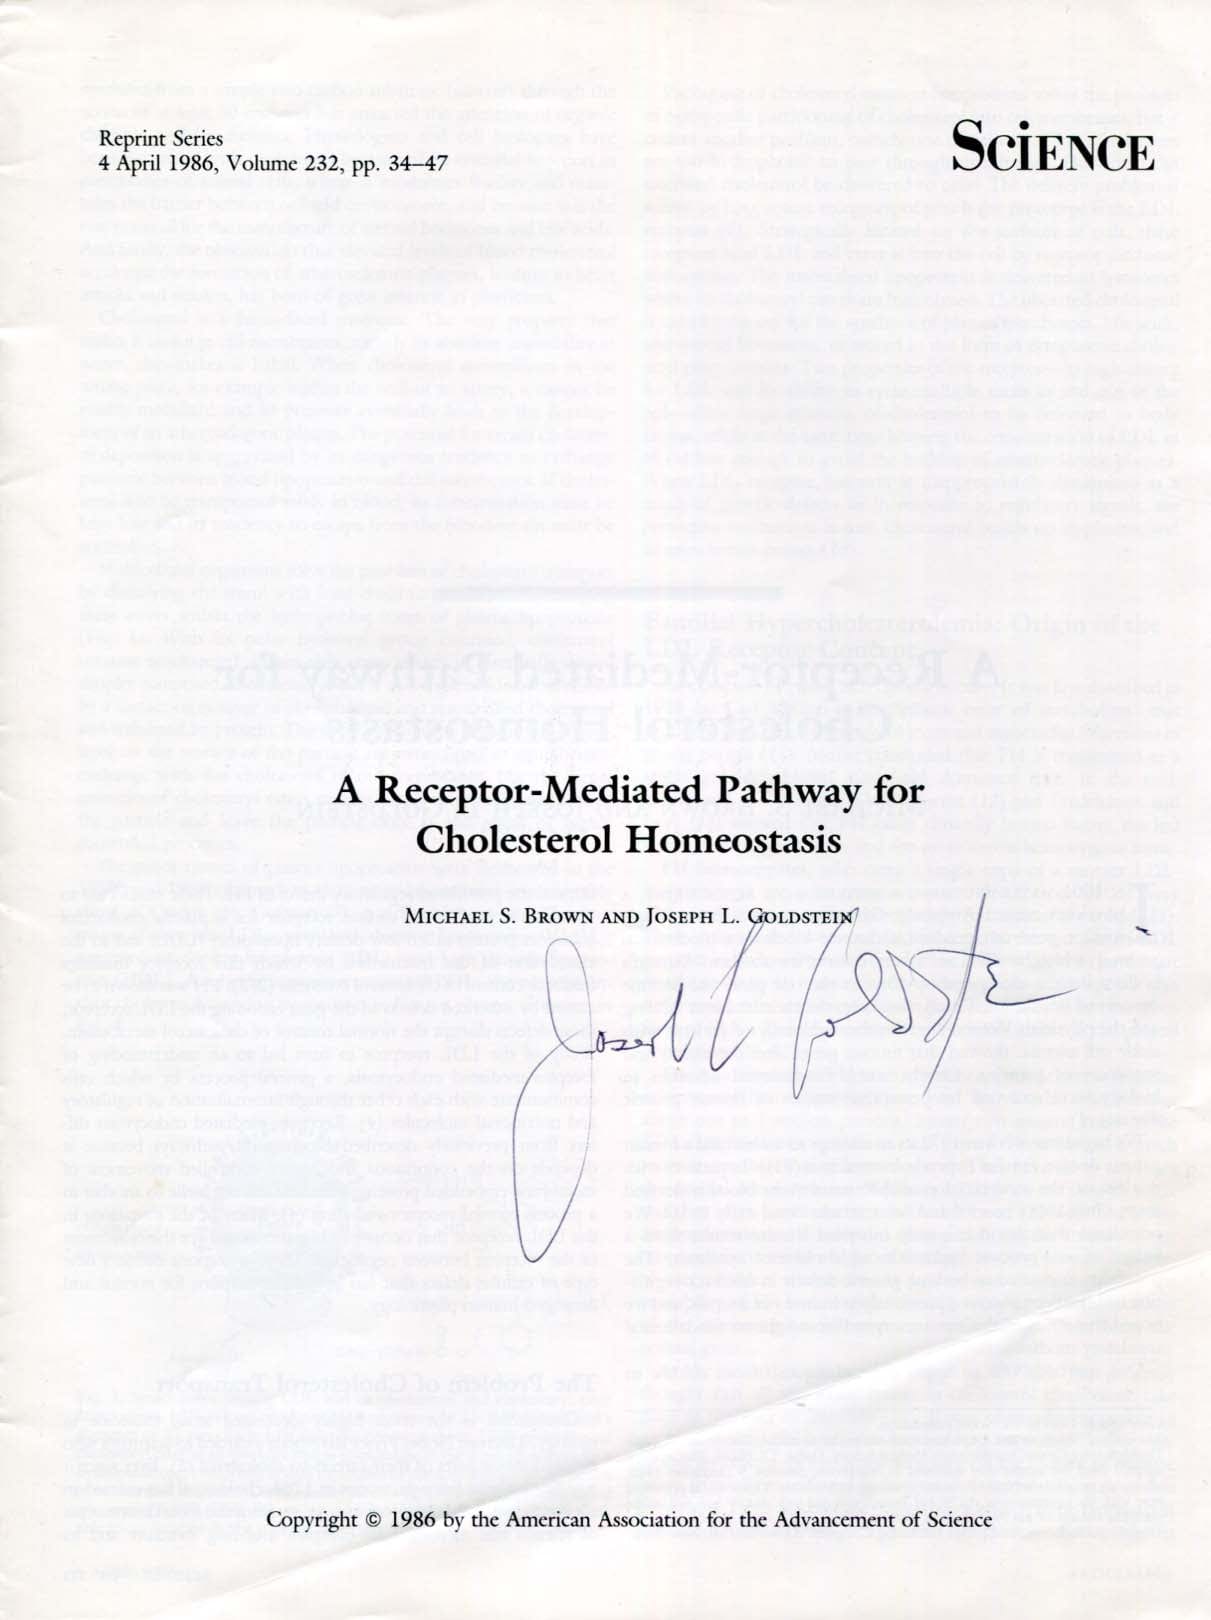 Joseph Leonard  Goldstein Autograph Autogramm | ID 8325281841301